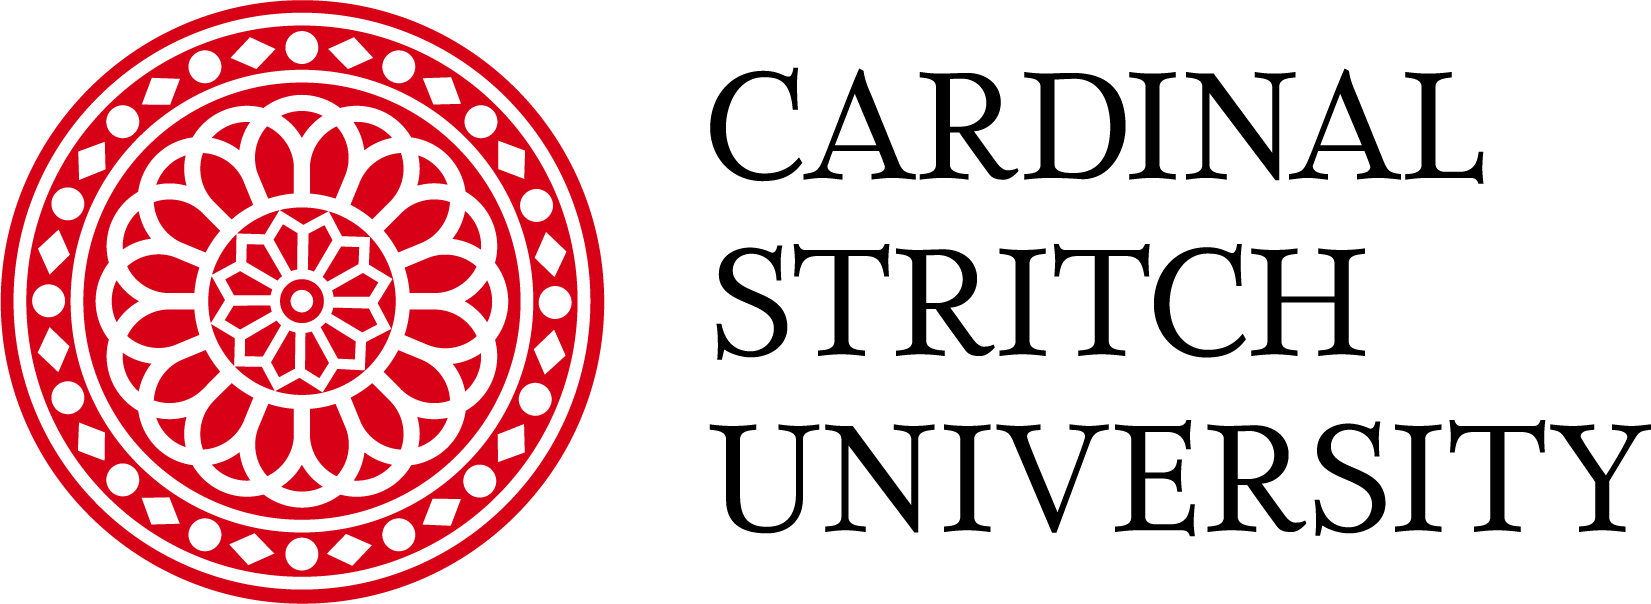 Cardinal Stritch logo